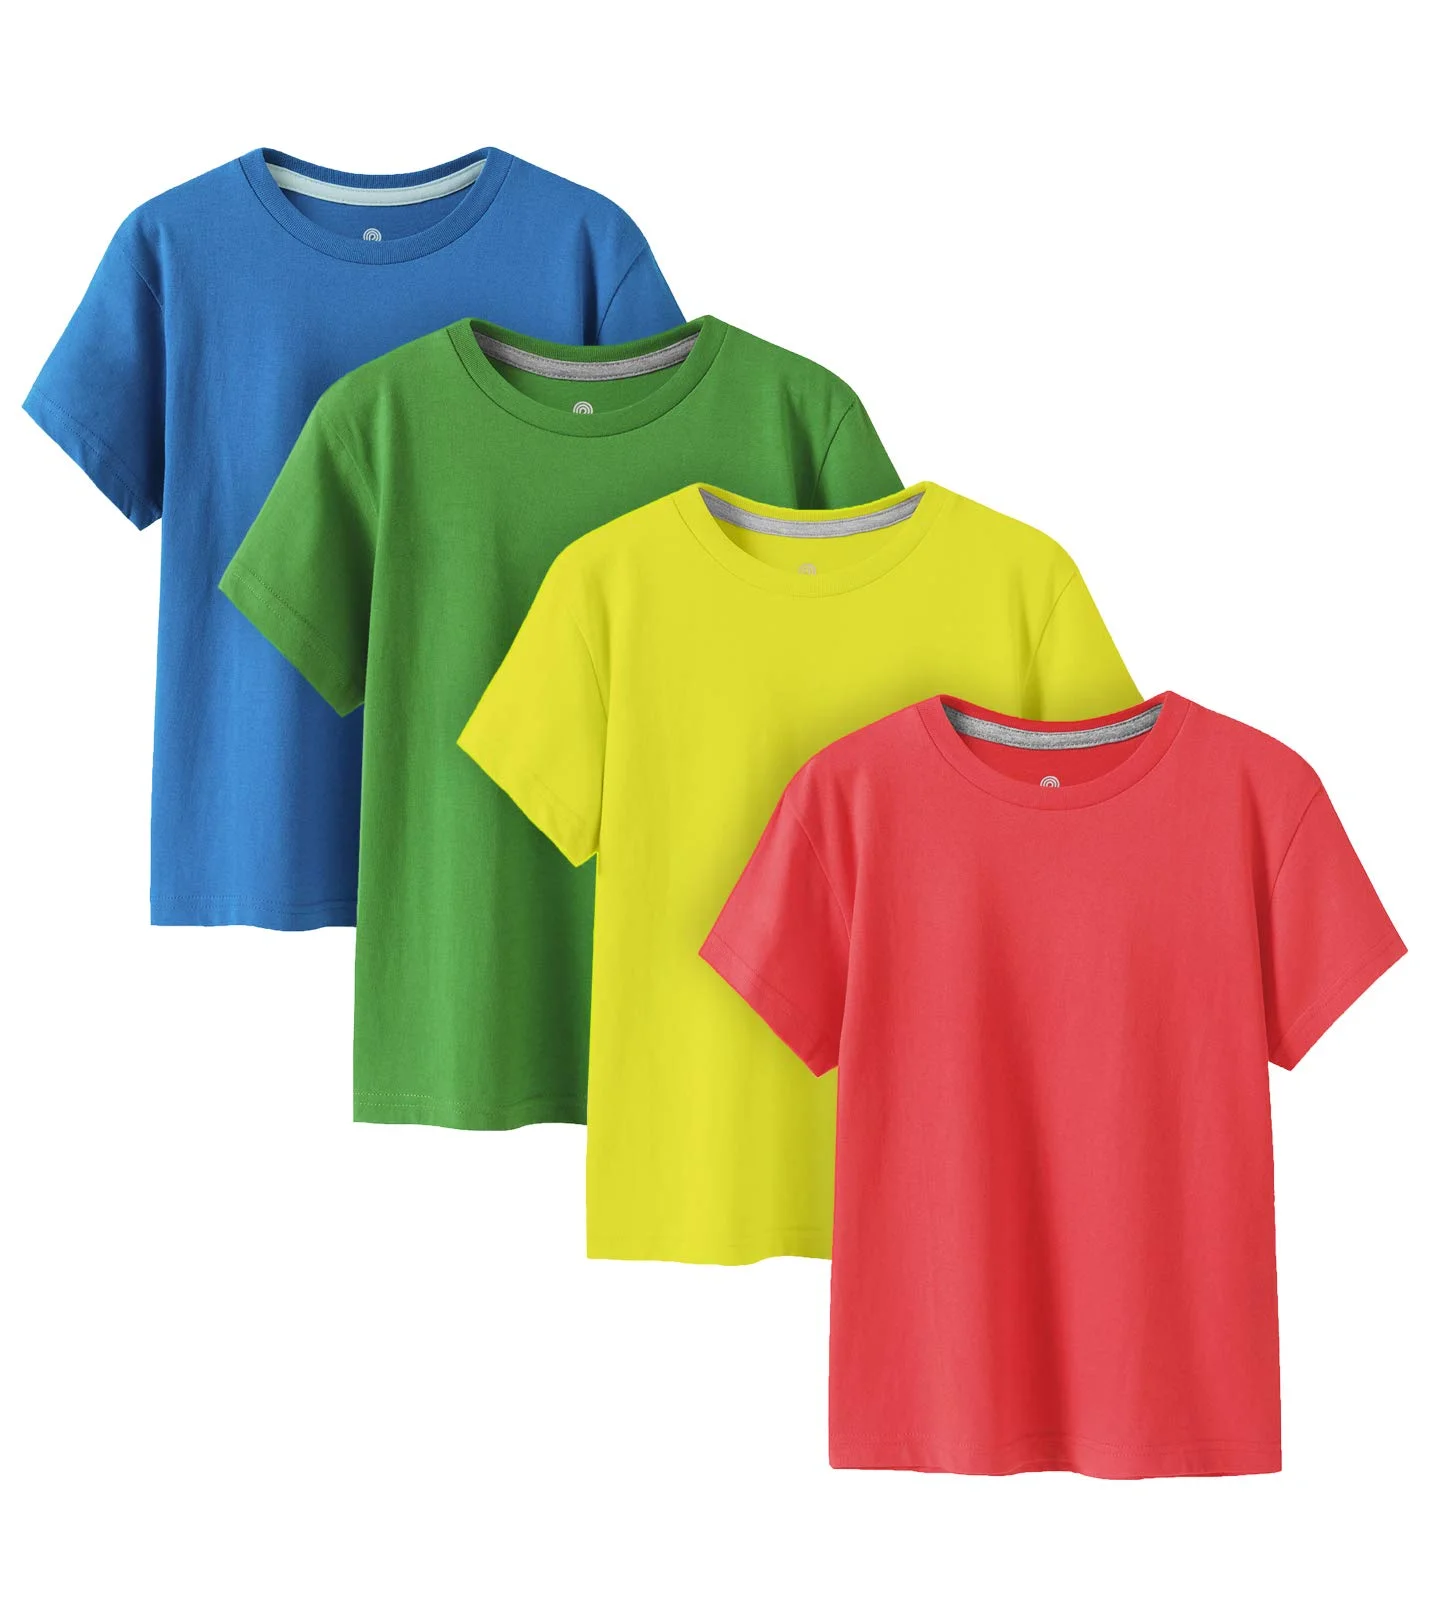 Wholesale T-shirts Belgium